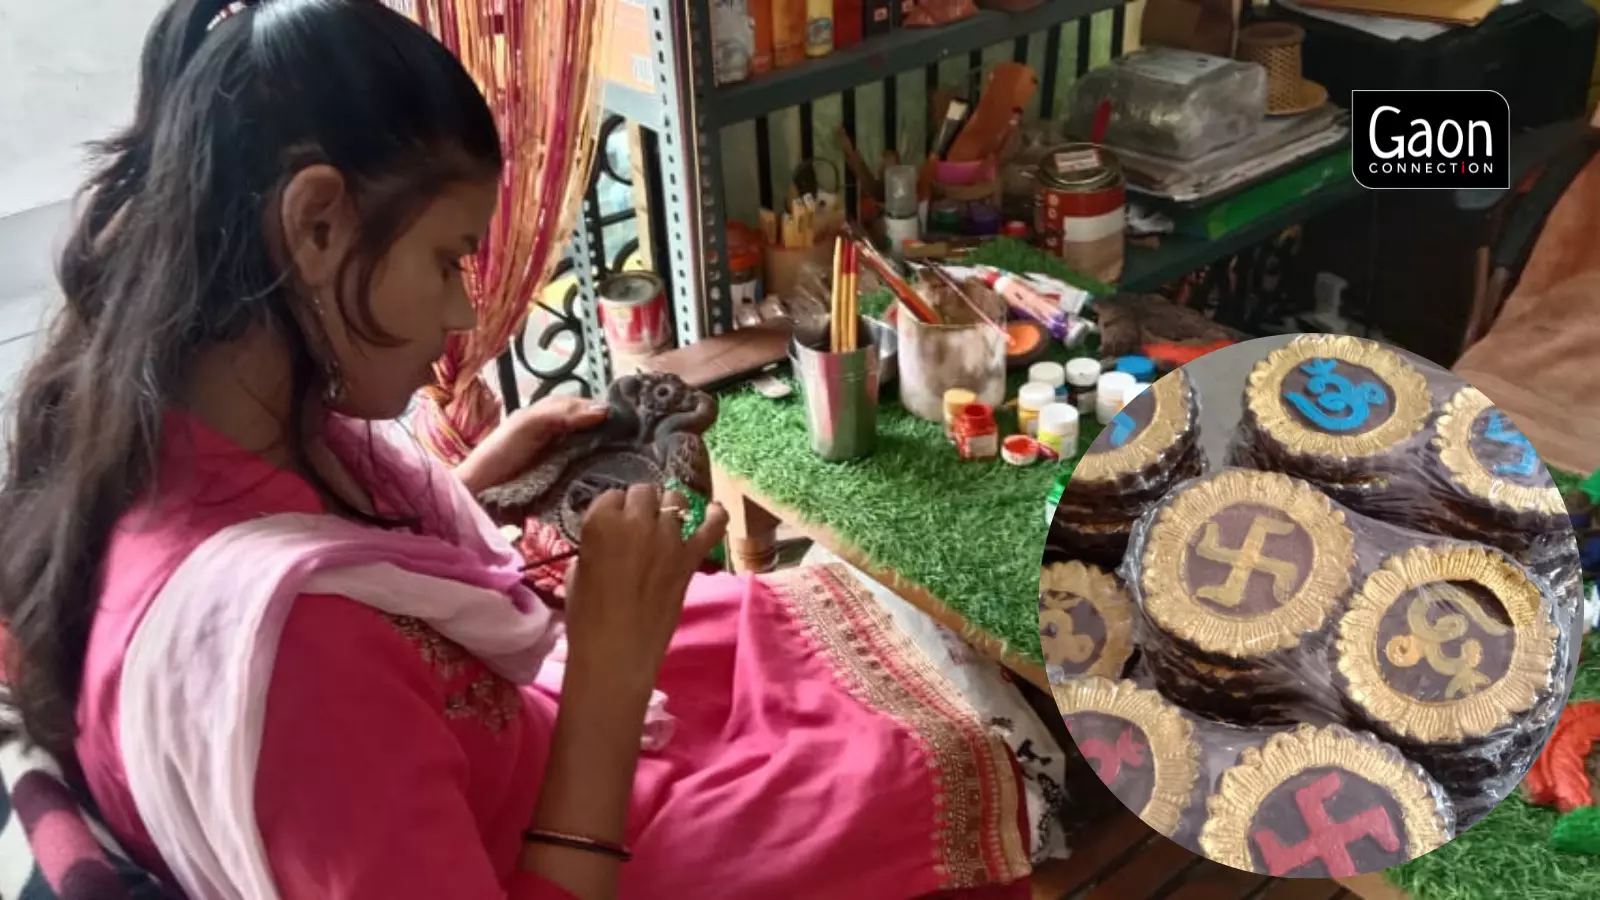 Dung to diyas — its a cakewalk for rural women in Uttar Pradesh